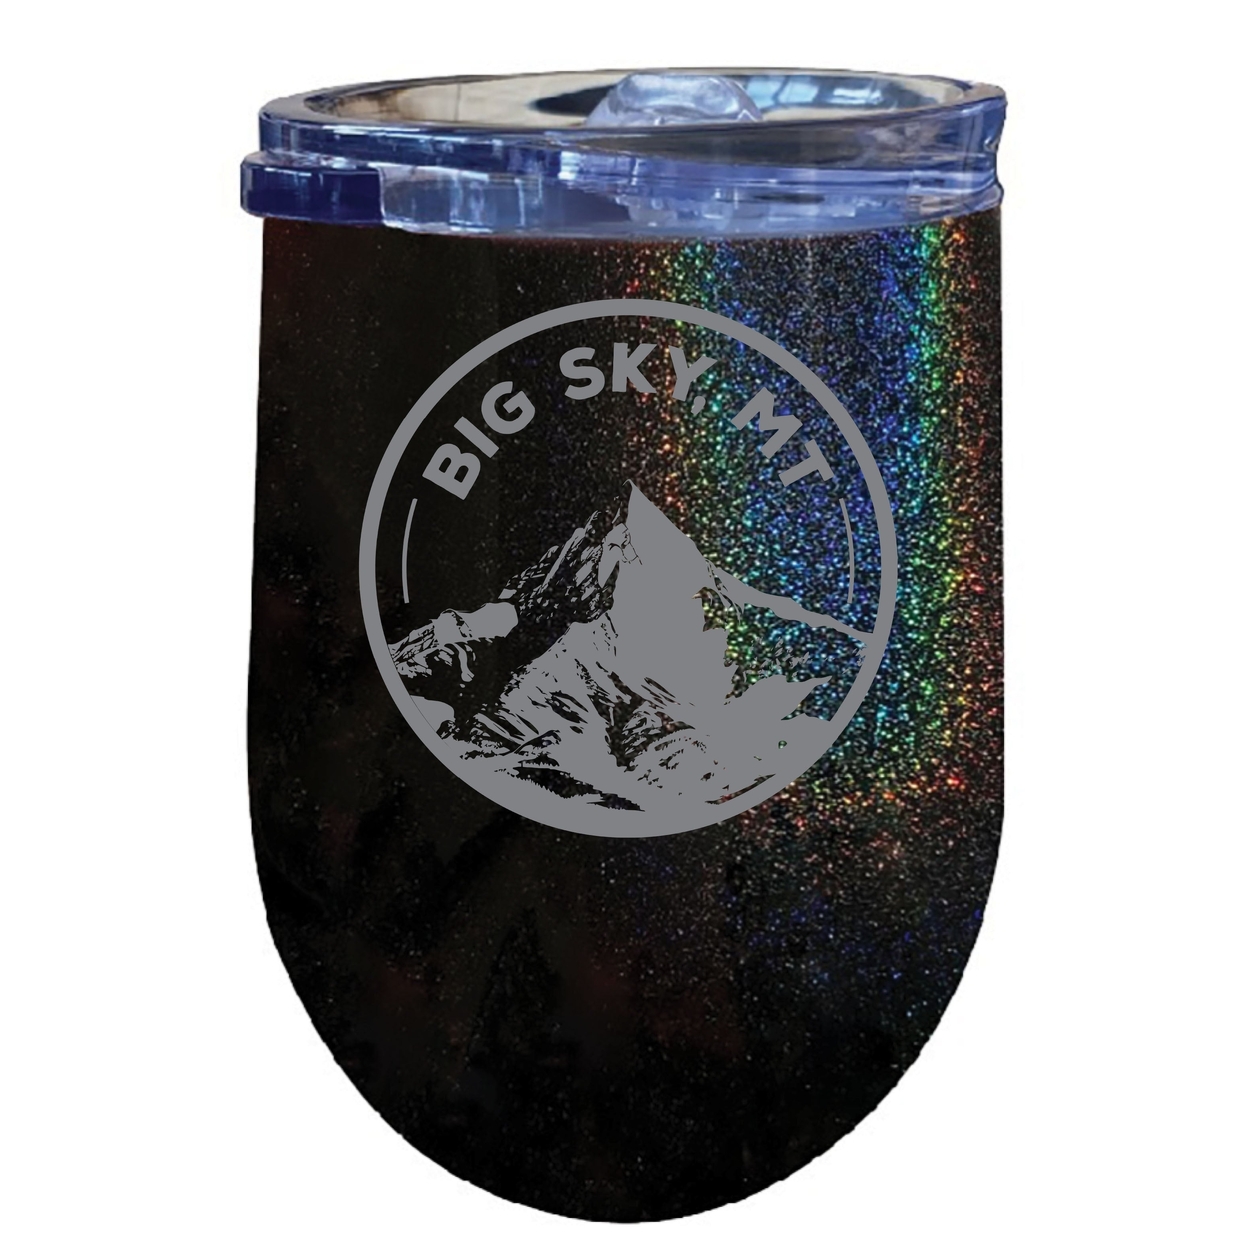 Big Sky Montana Souvenir 12 Oz Engraved Insulated Wine Stainless Steel Tumbler - Rainbow Glitter Gray,,Single Unit